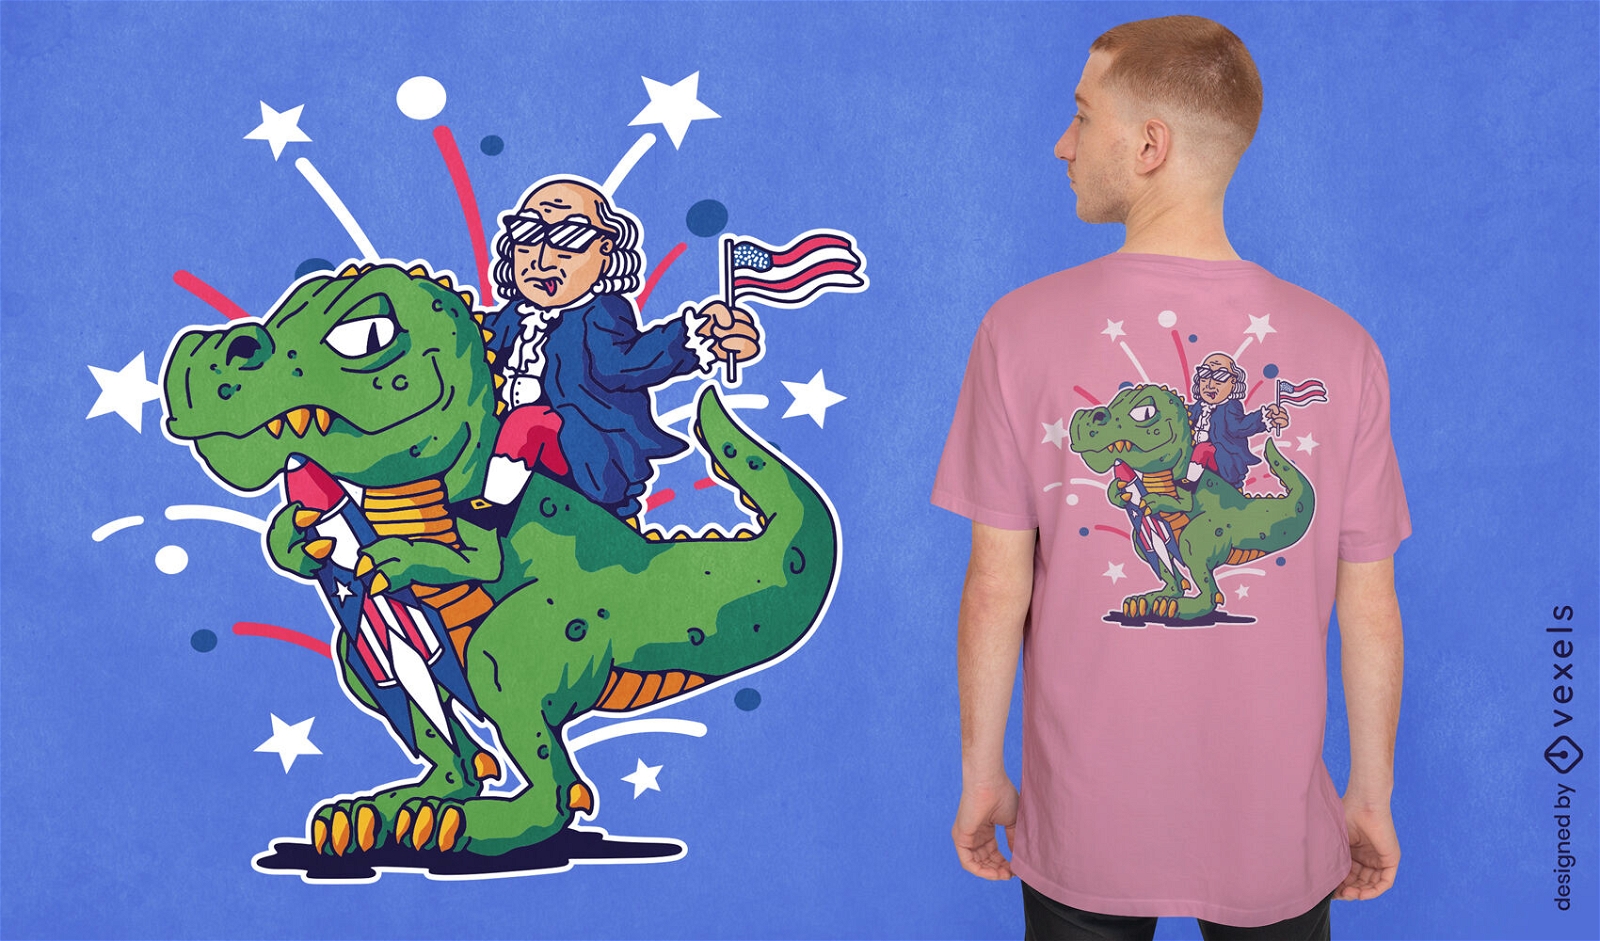 Benjamin Franklin riding t-rex t-shirt design